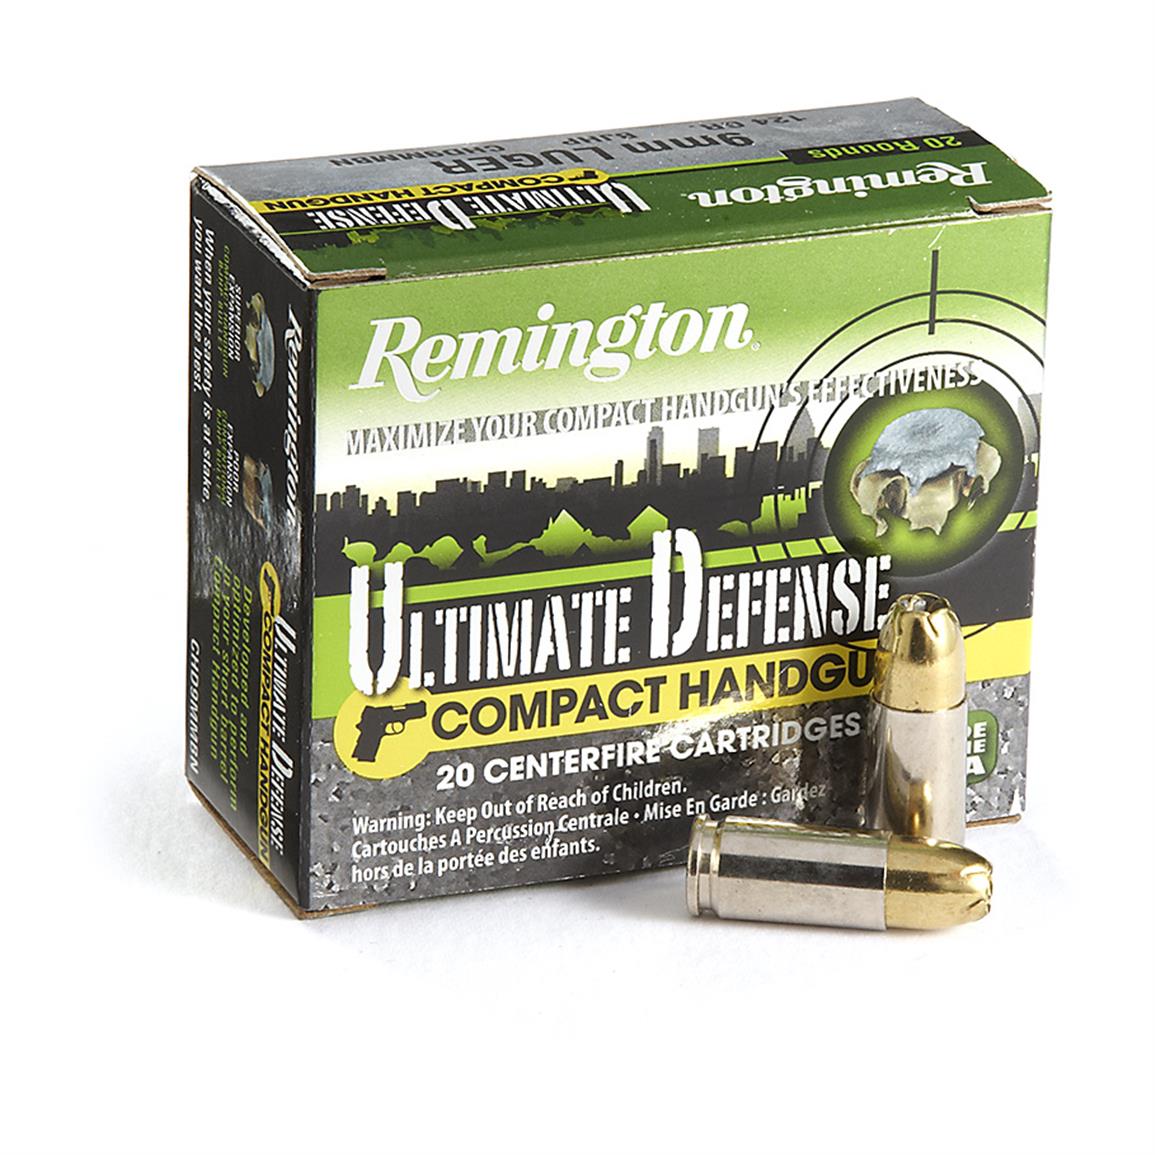 Remington Ultimate Defense Compact Handgun, 9mm, BJHP, 124 Grain, 20 Rounds